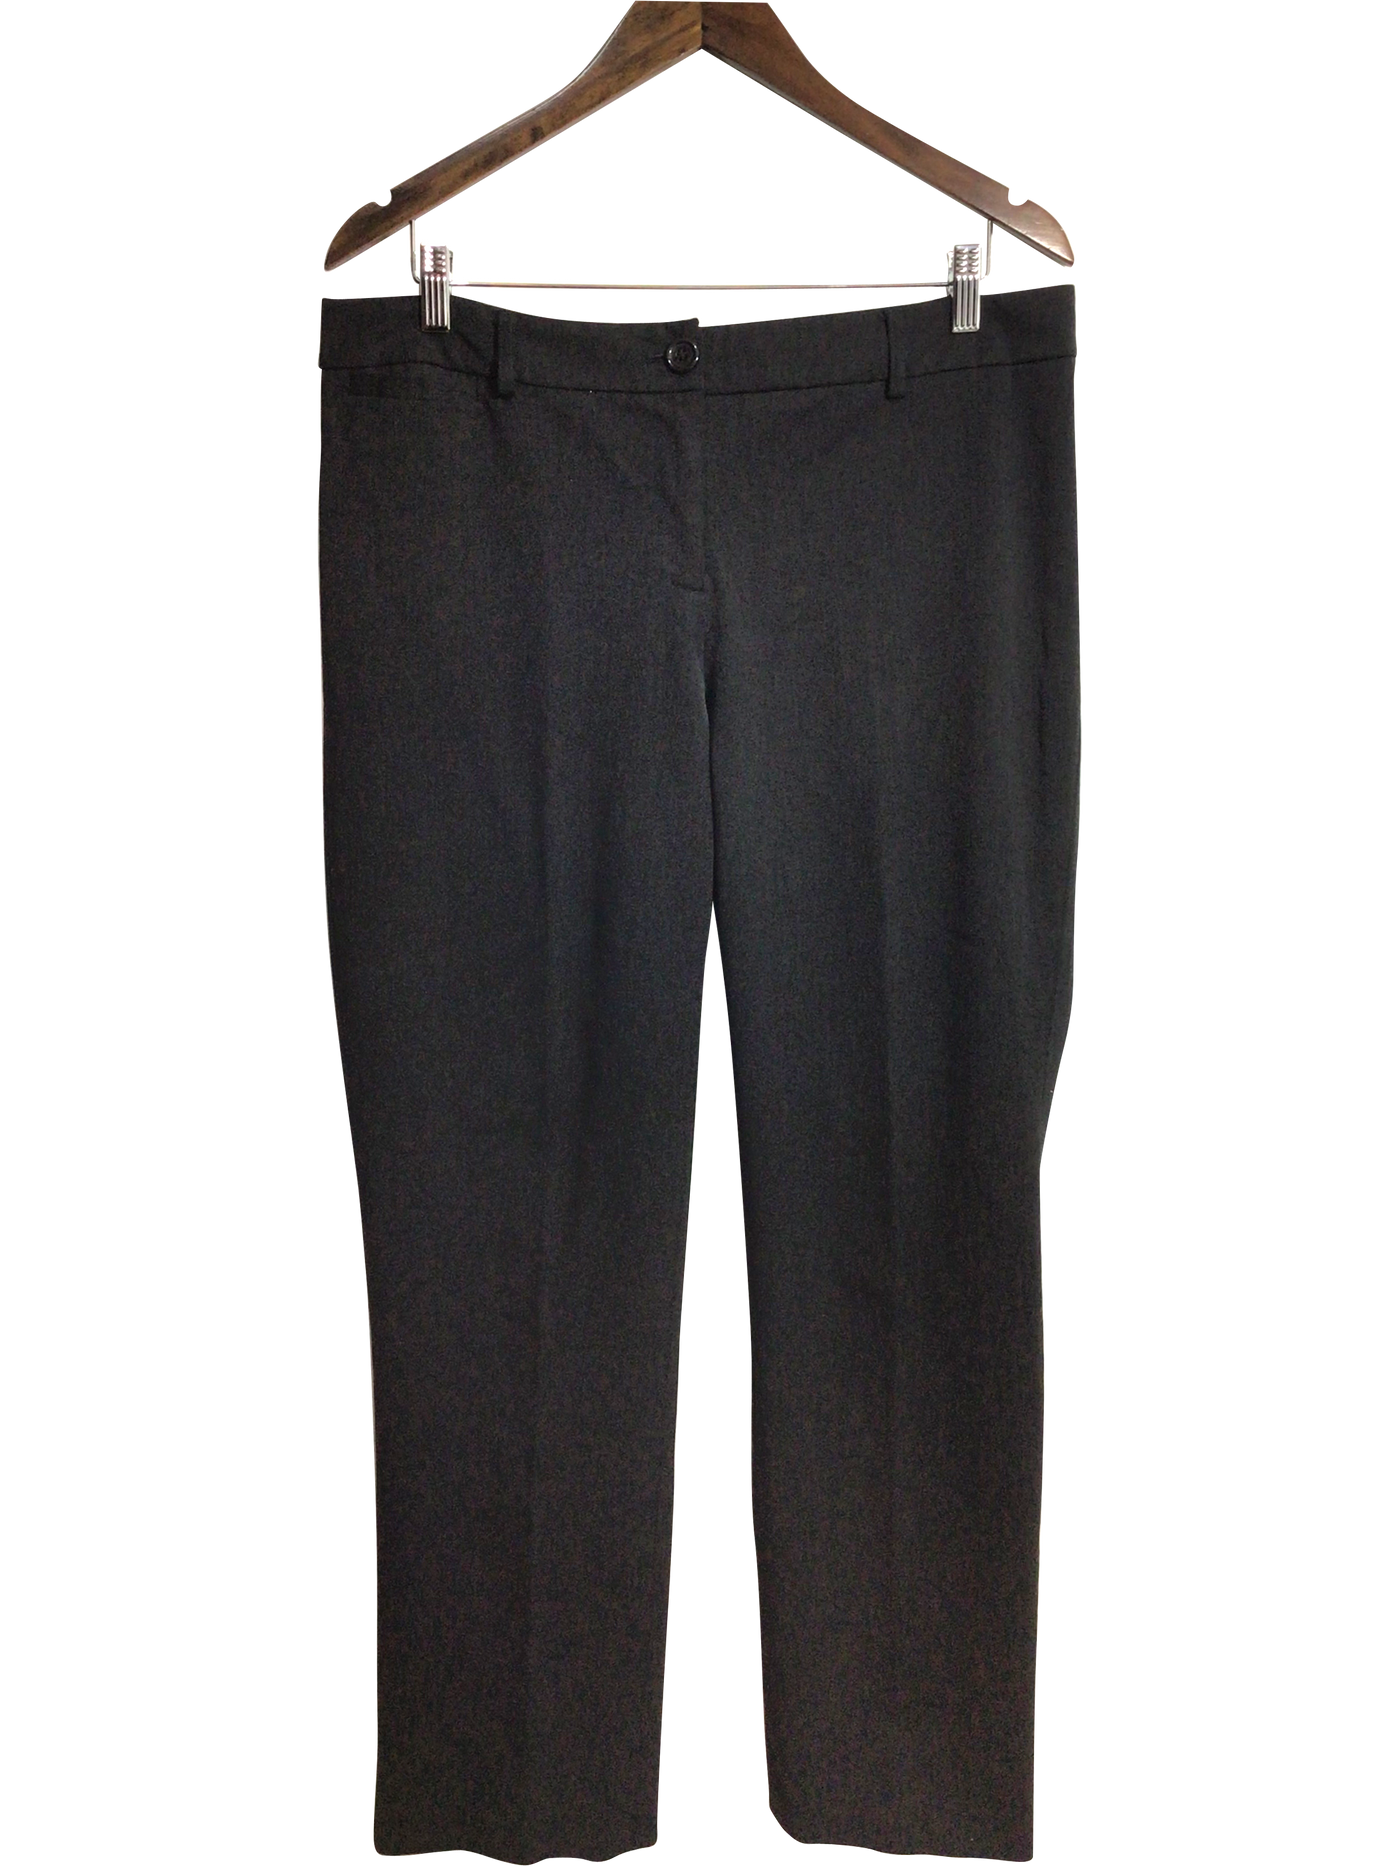 HILARY RADLEY Women Work Pants Regular fit in Black - Size 12X30 | 11.39 $ KOOP